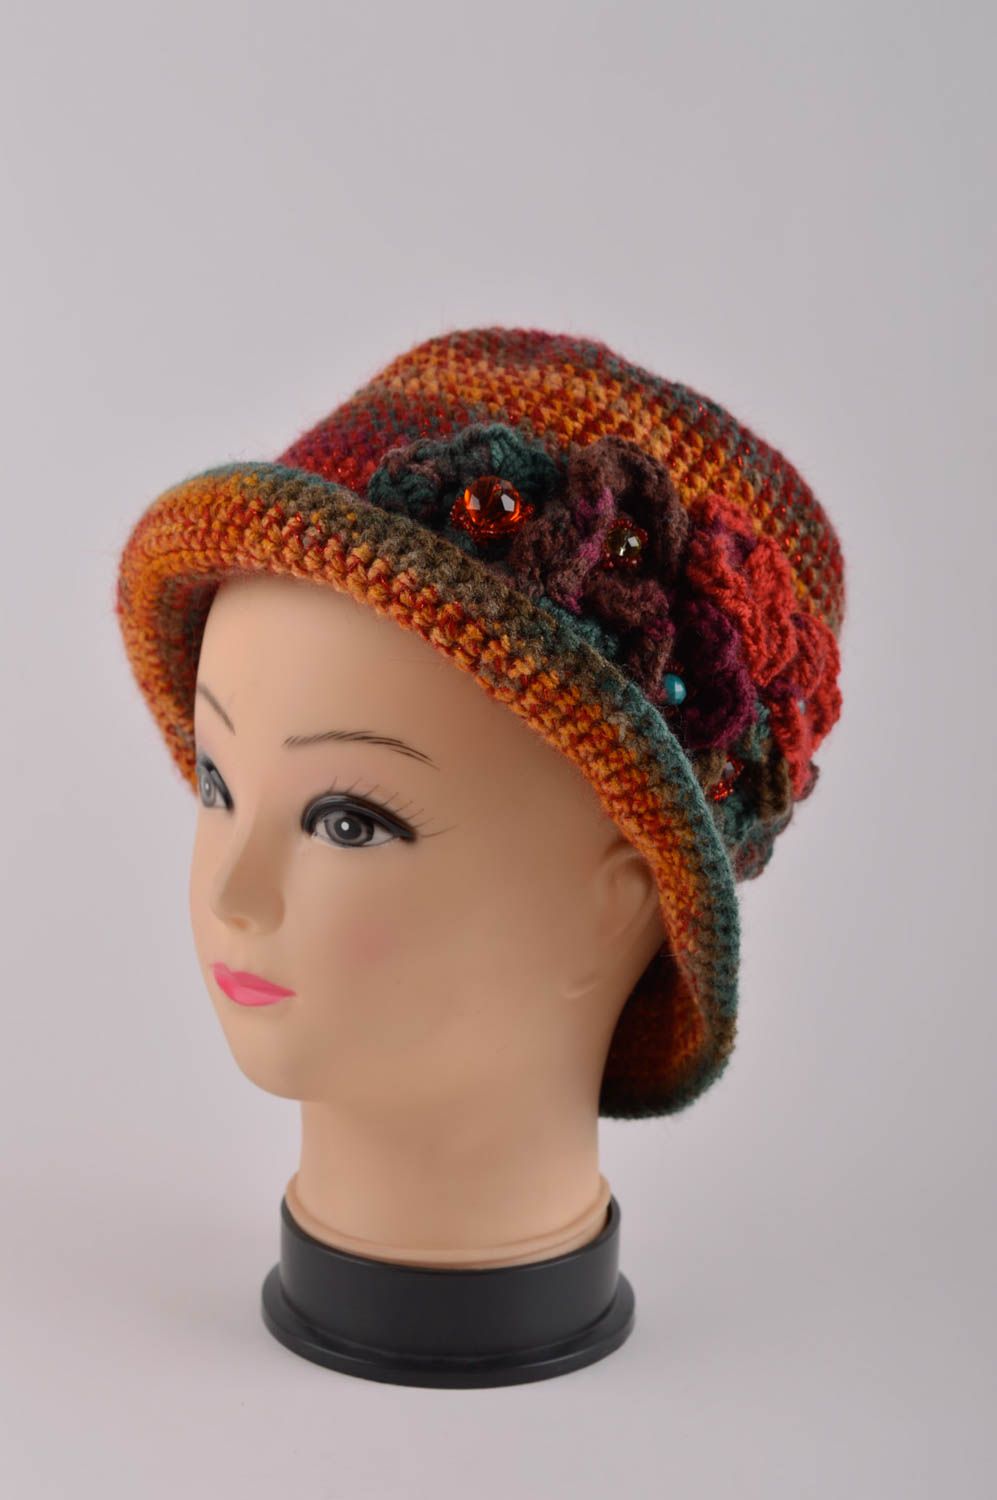 Handmade crochet hat fashion accessories ladies hat best gifts for women photo 2